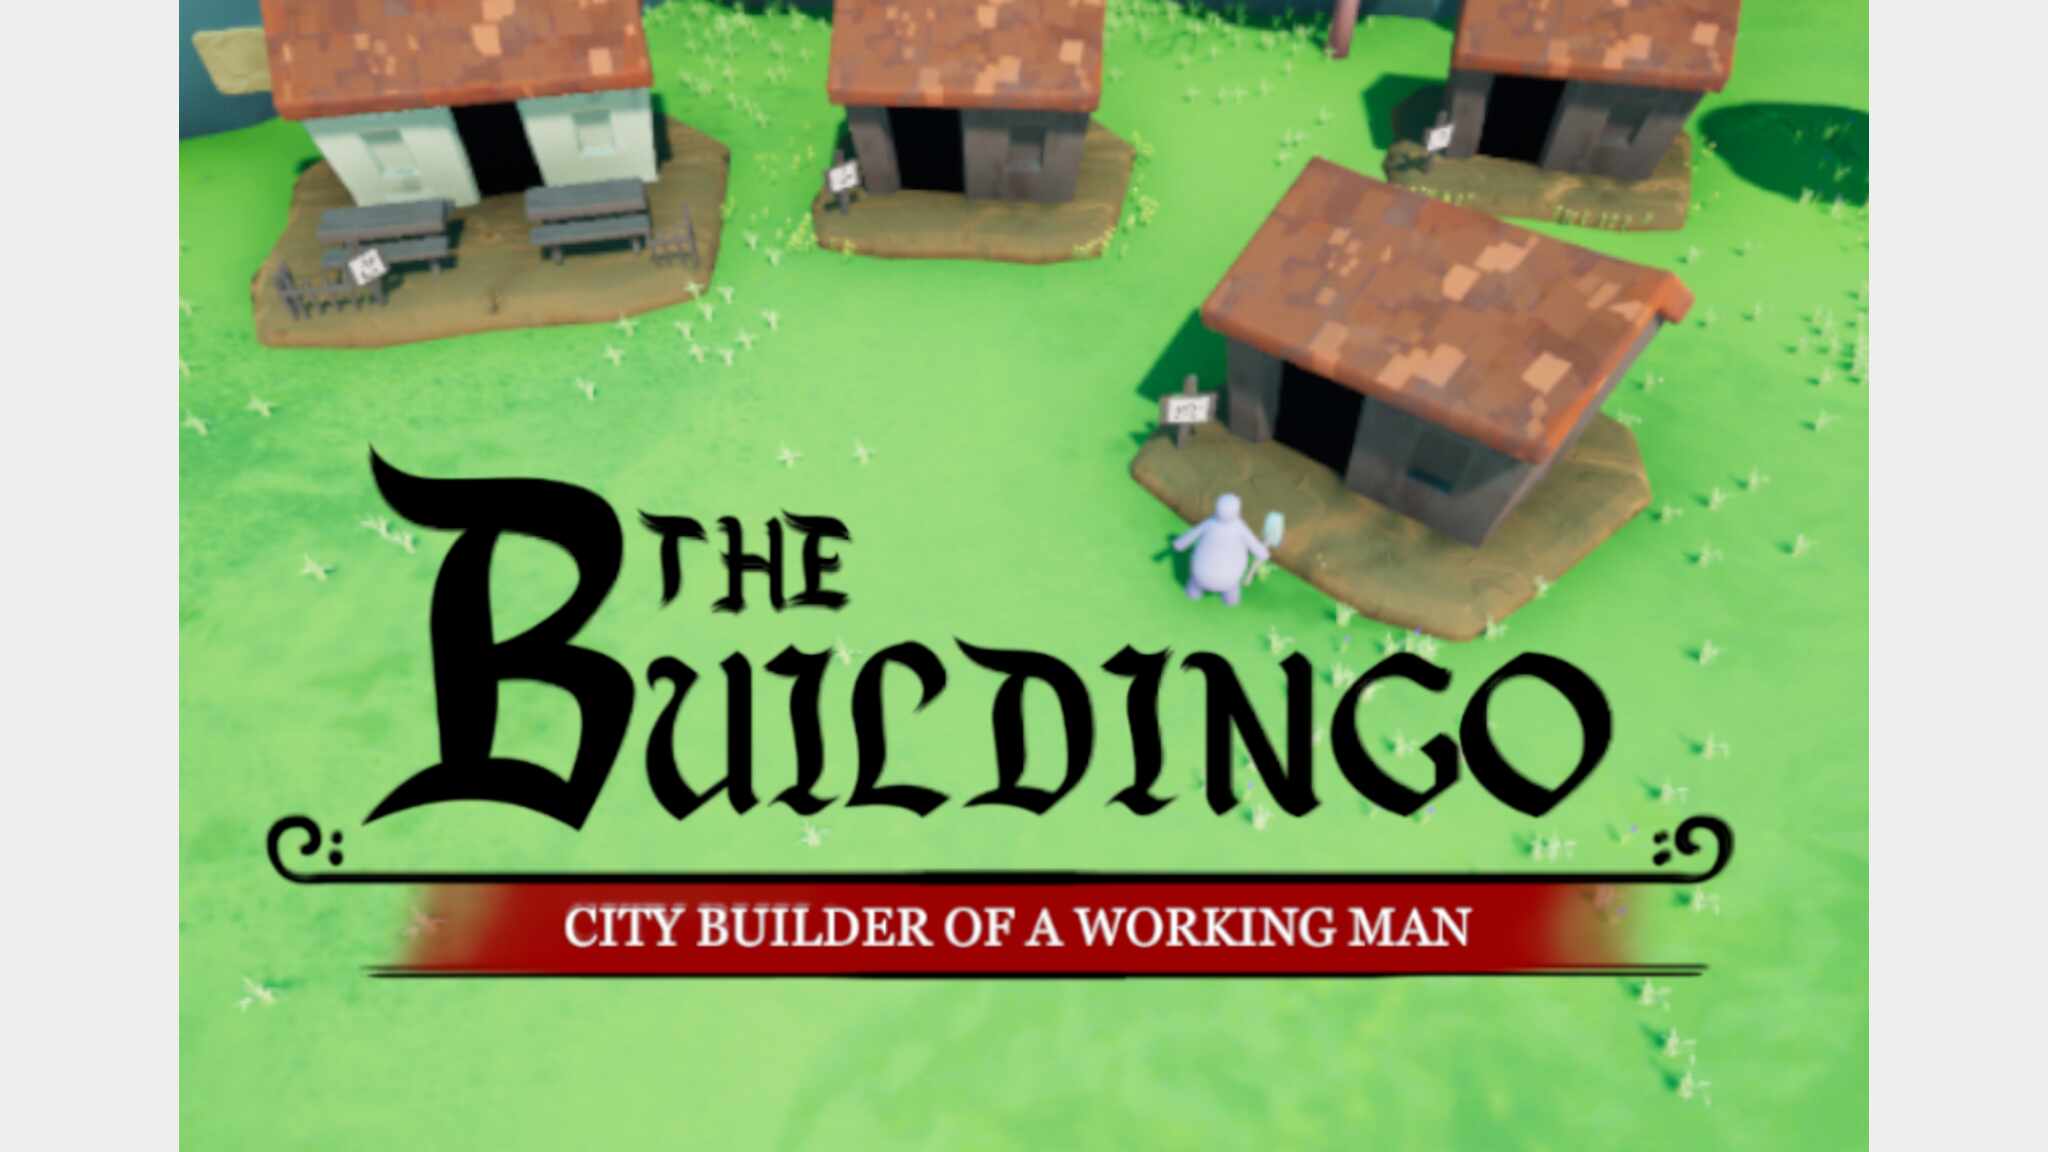 Buildingo: The city builder of a working man